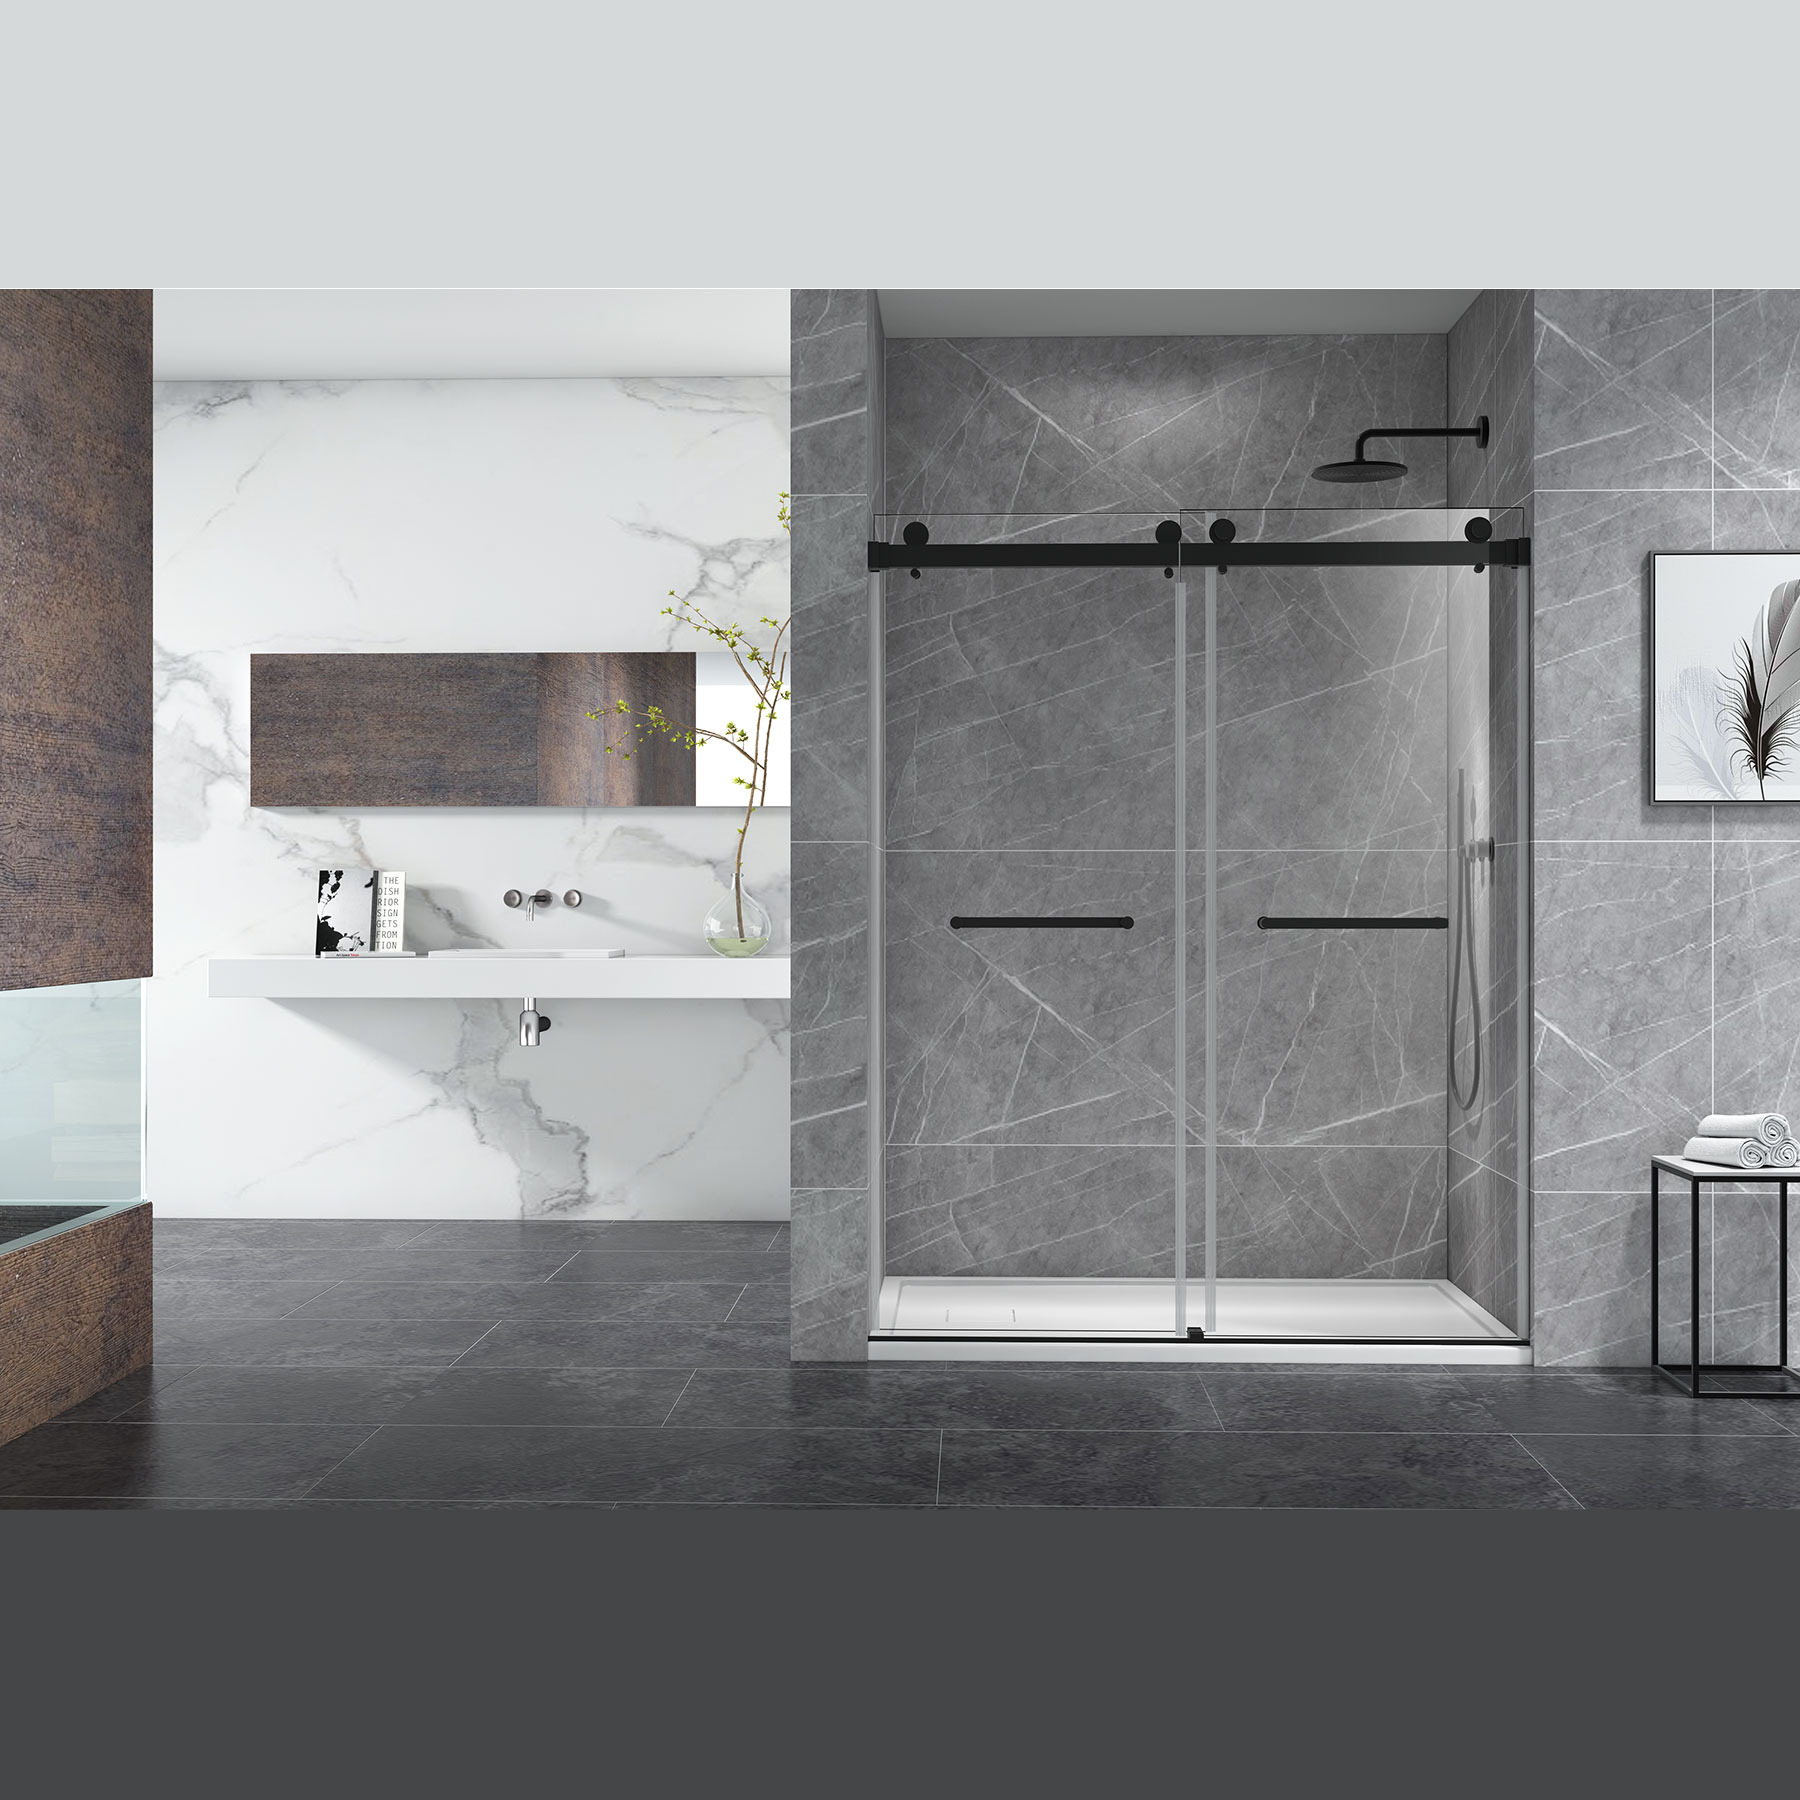 Chrome Finish Shower Door: Sleek, Stylish, and Durable Design for Your Bathroom